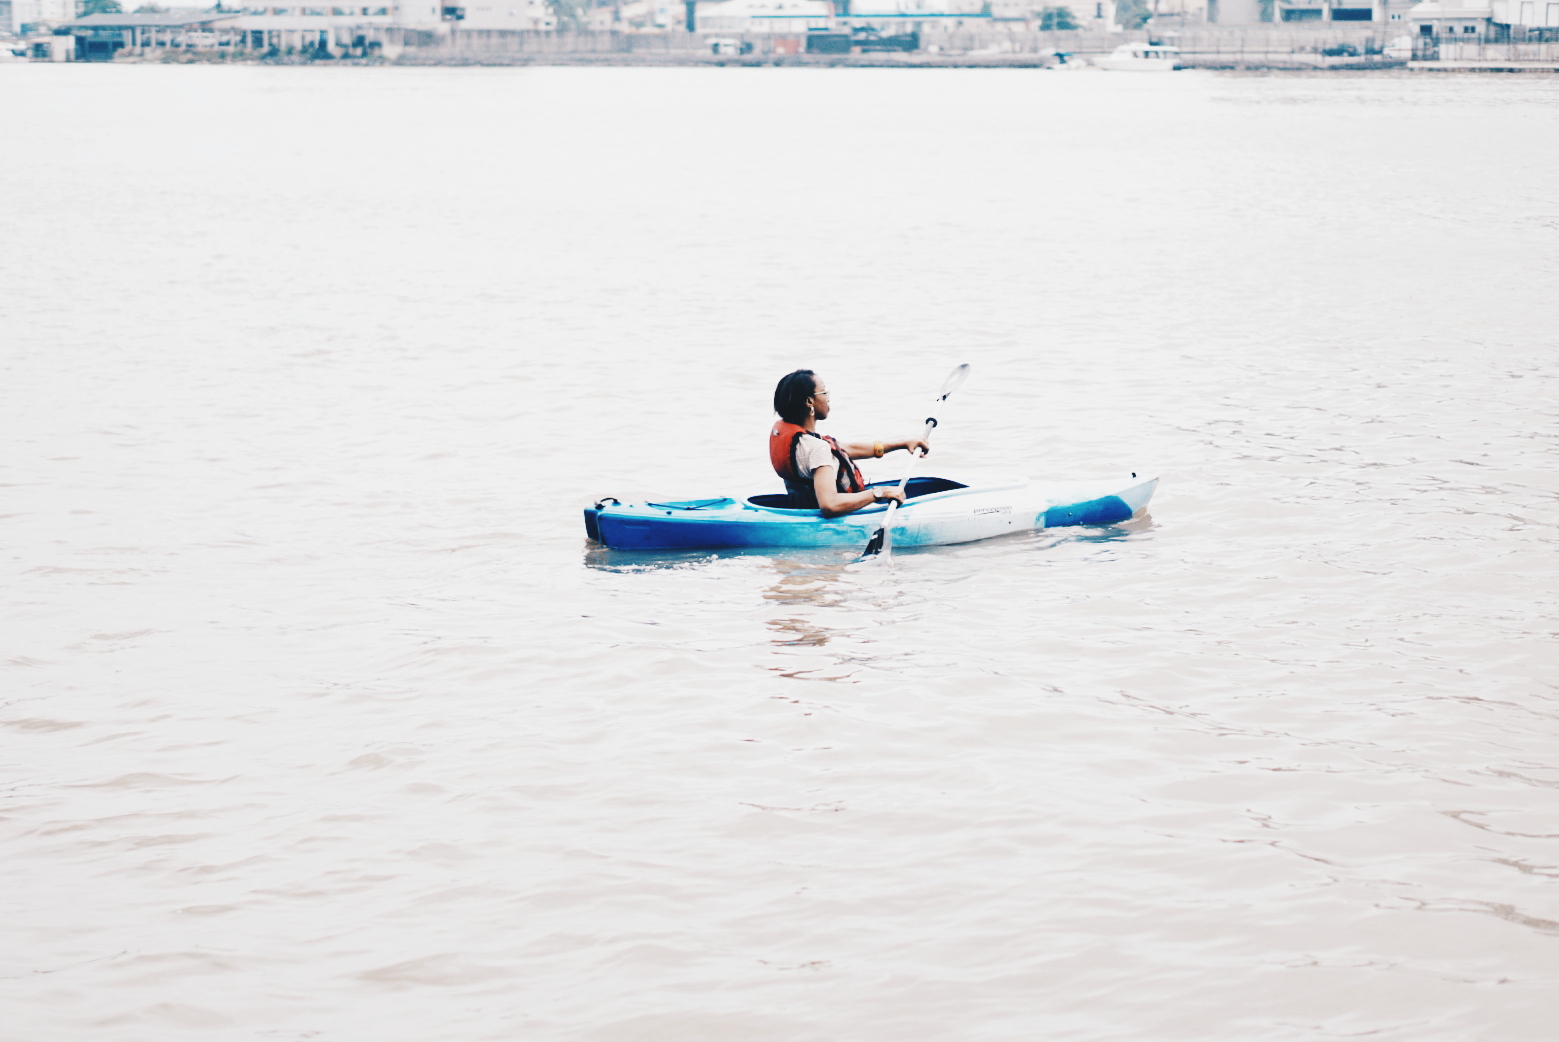 Cassie daves kayaking in Lagos - things to do in lagos